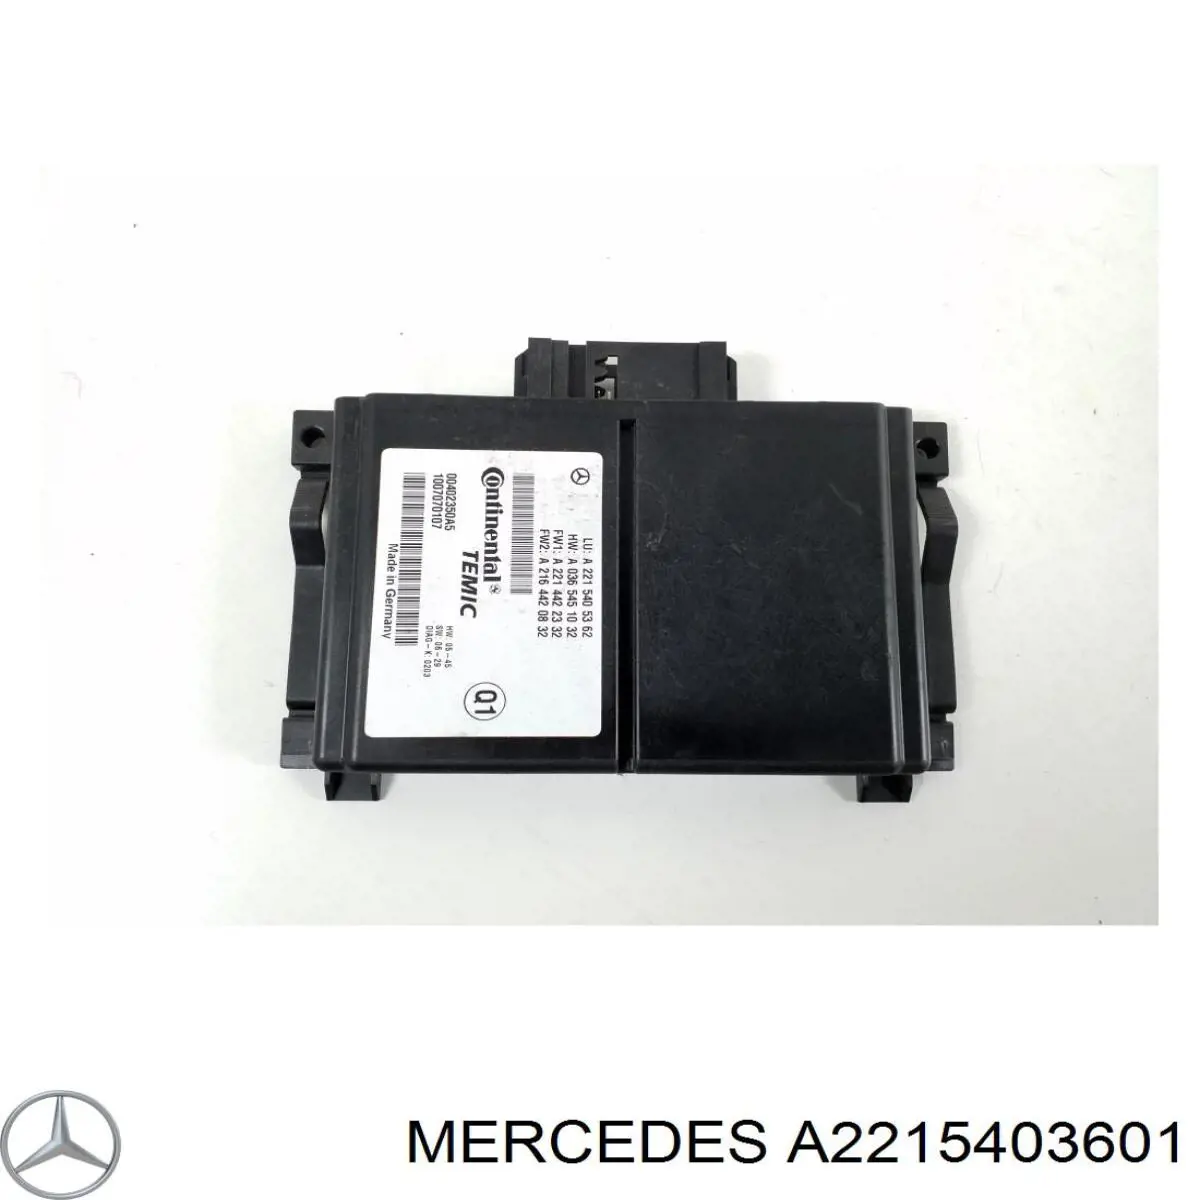 A2215403601 Mercedes